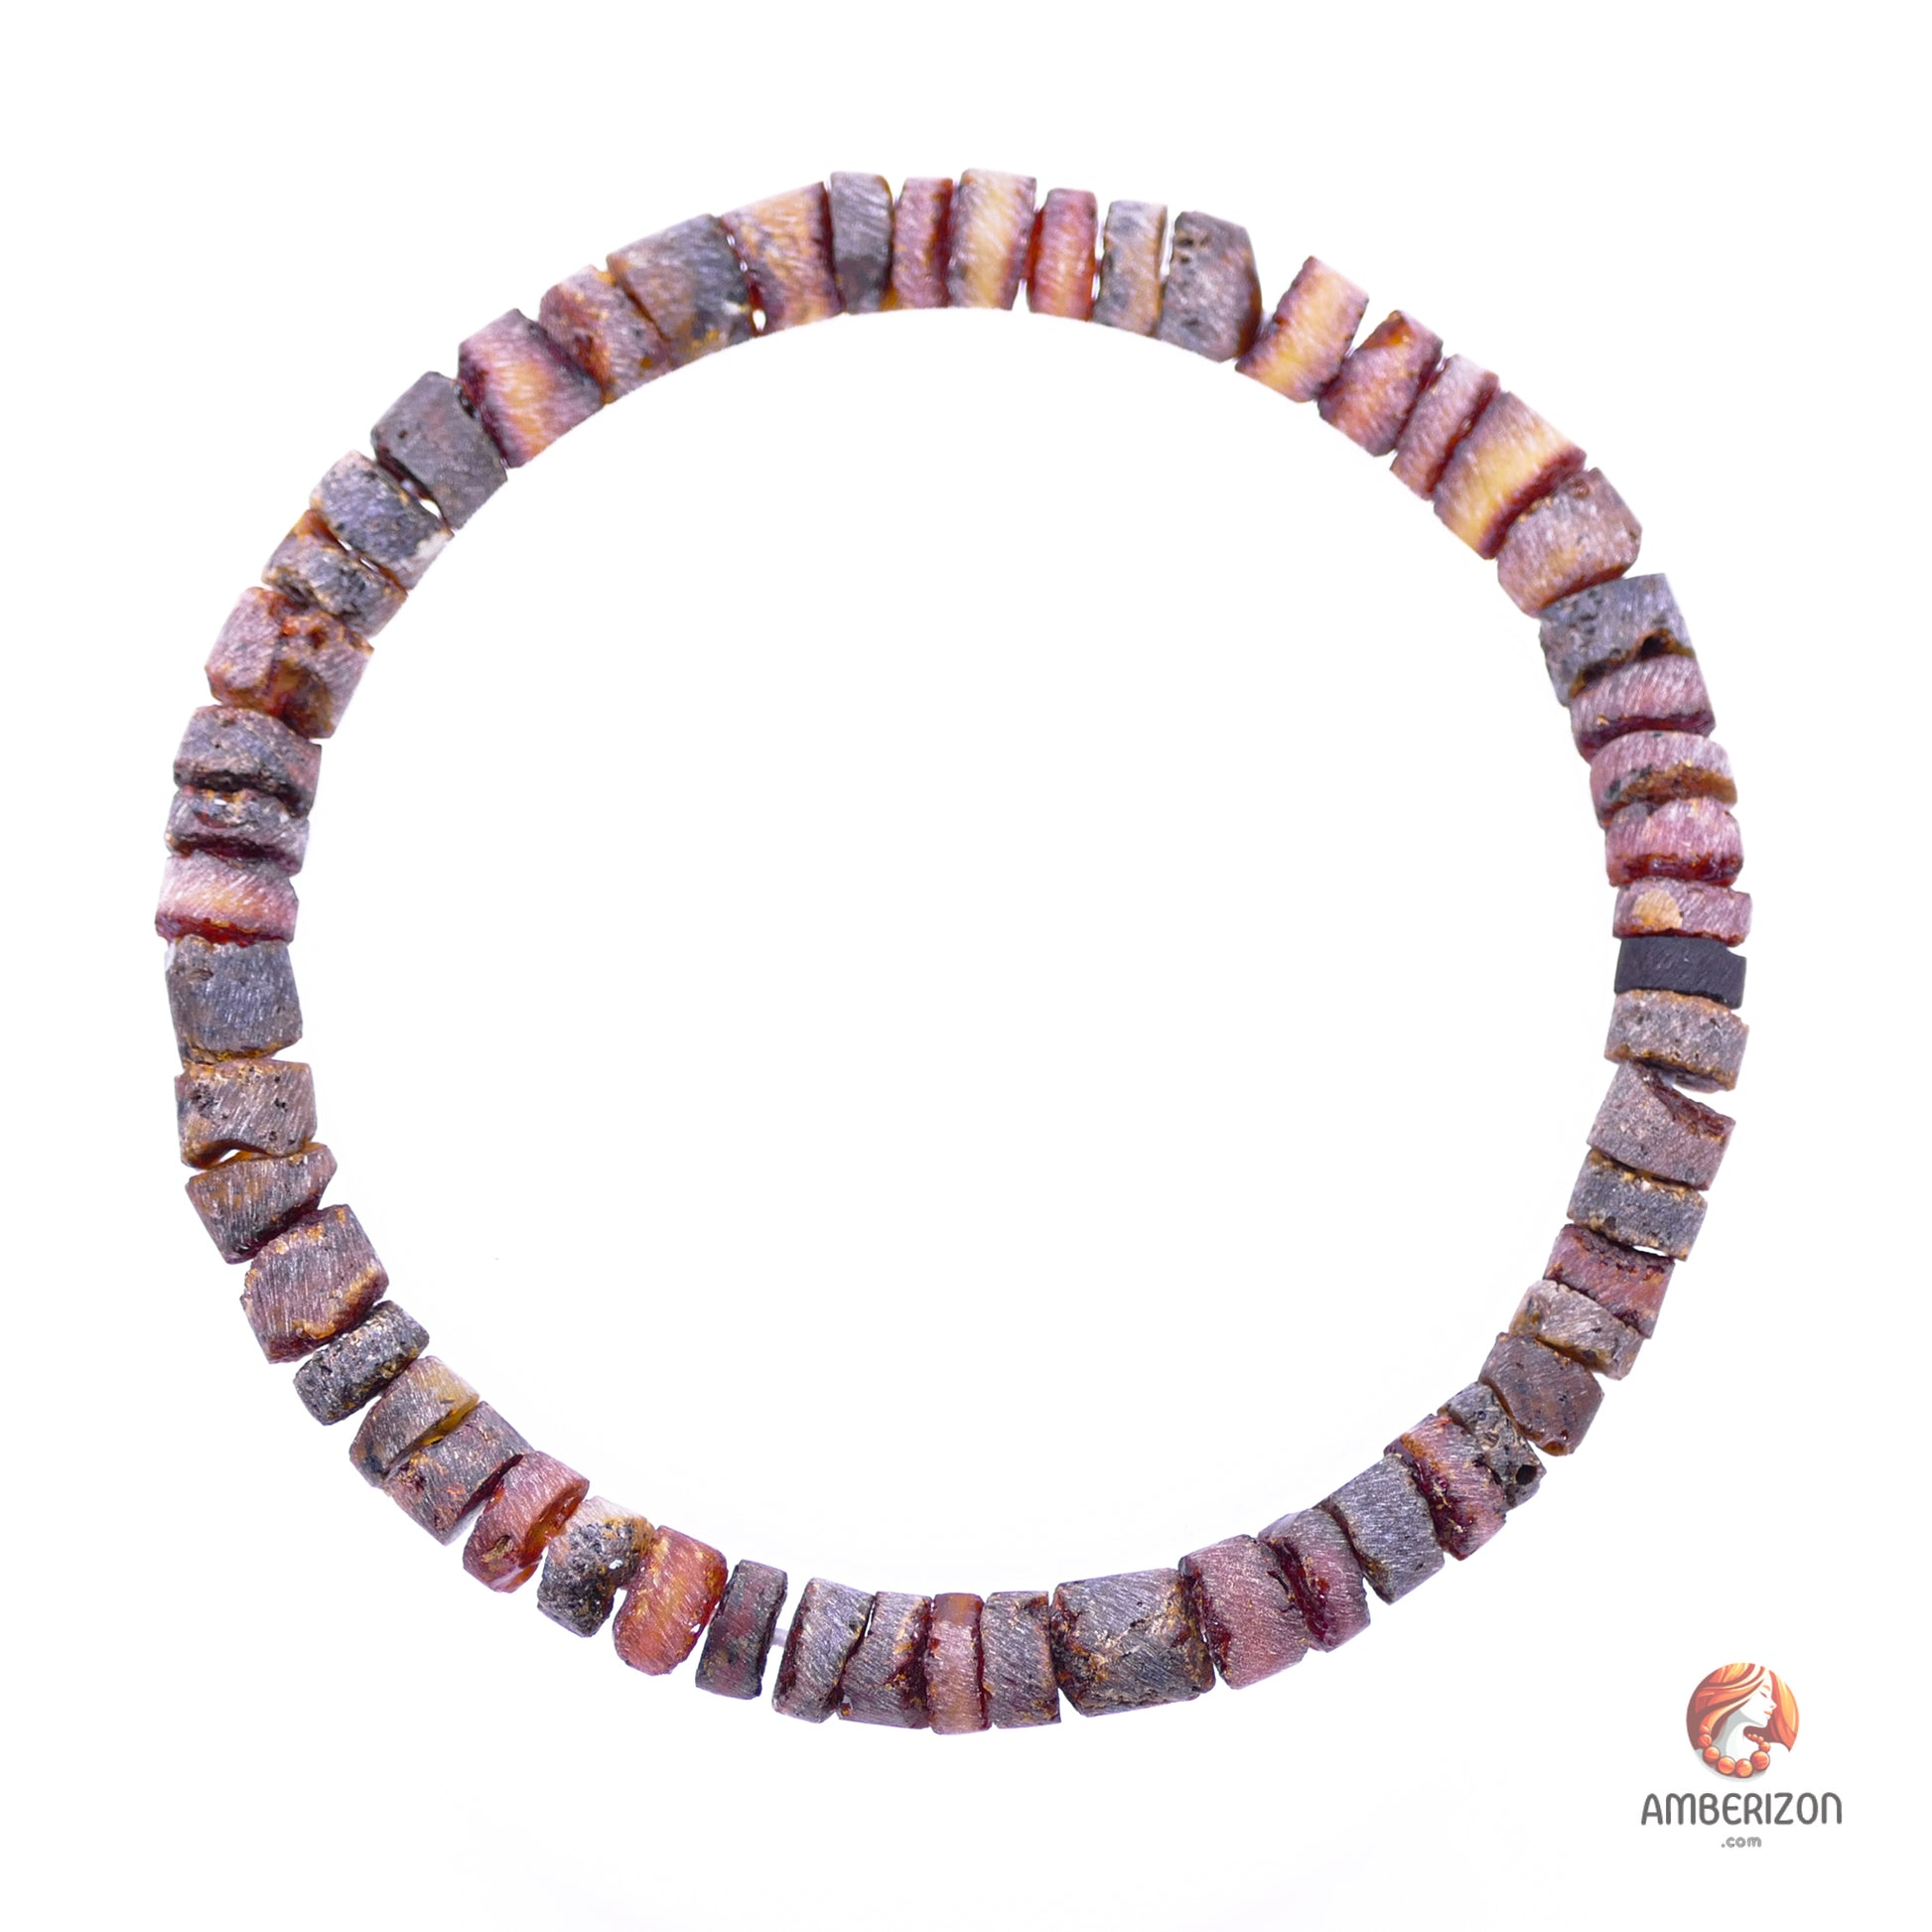 Baltic raw amber bracelet - red-orange cylinder beads - Stretchy